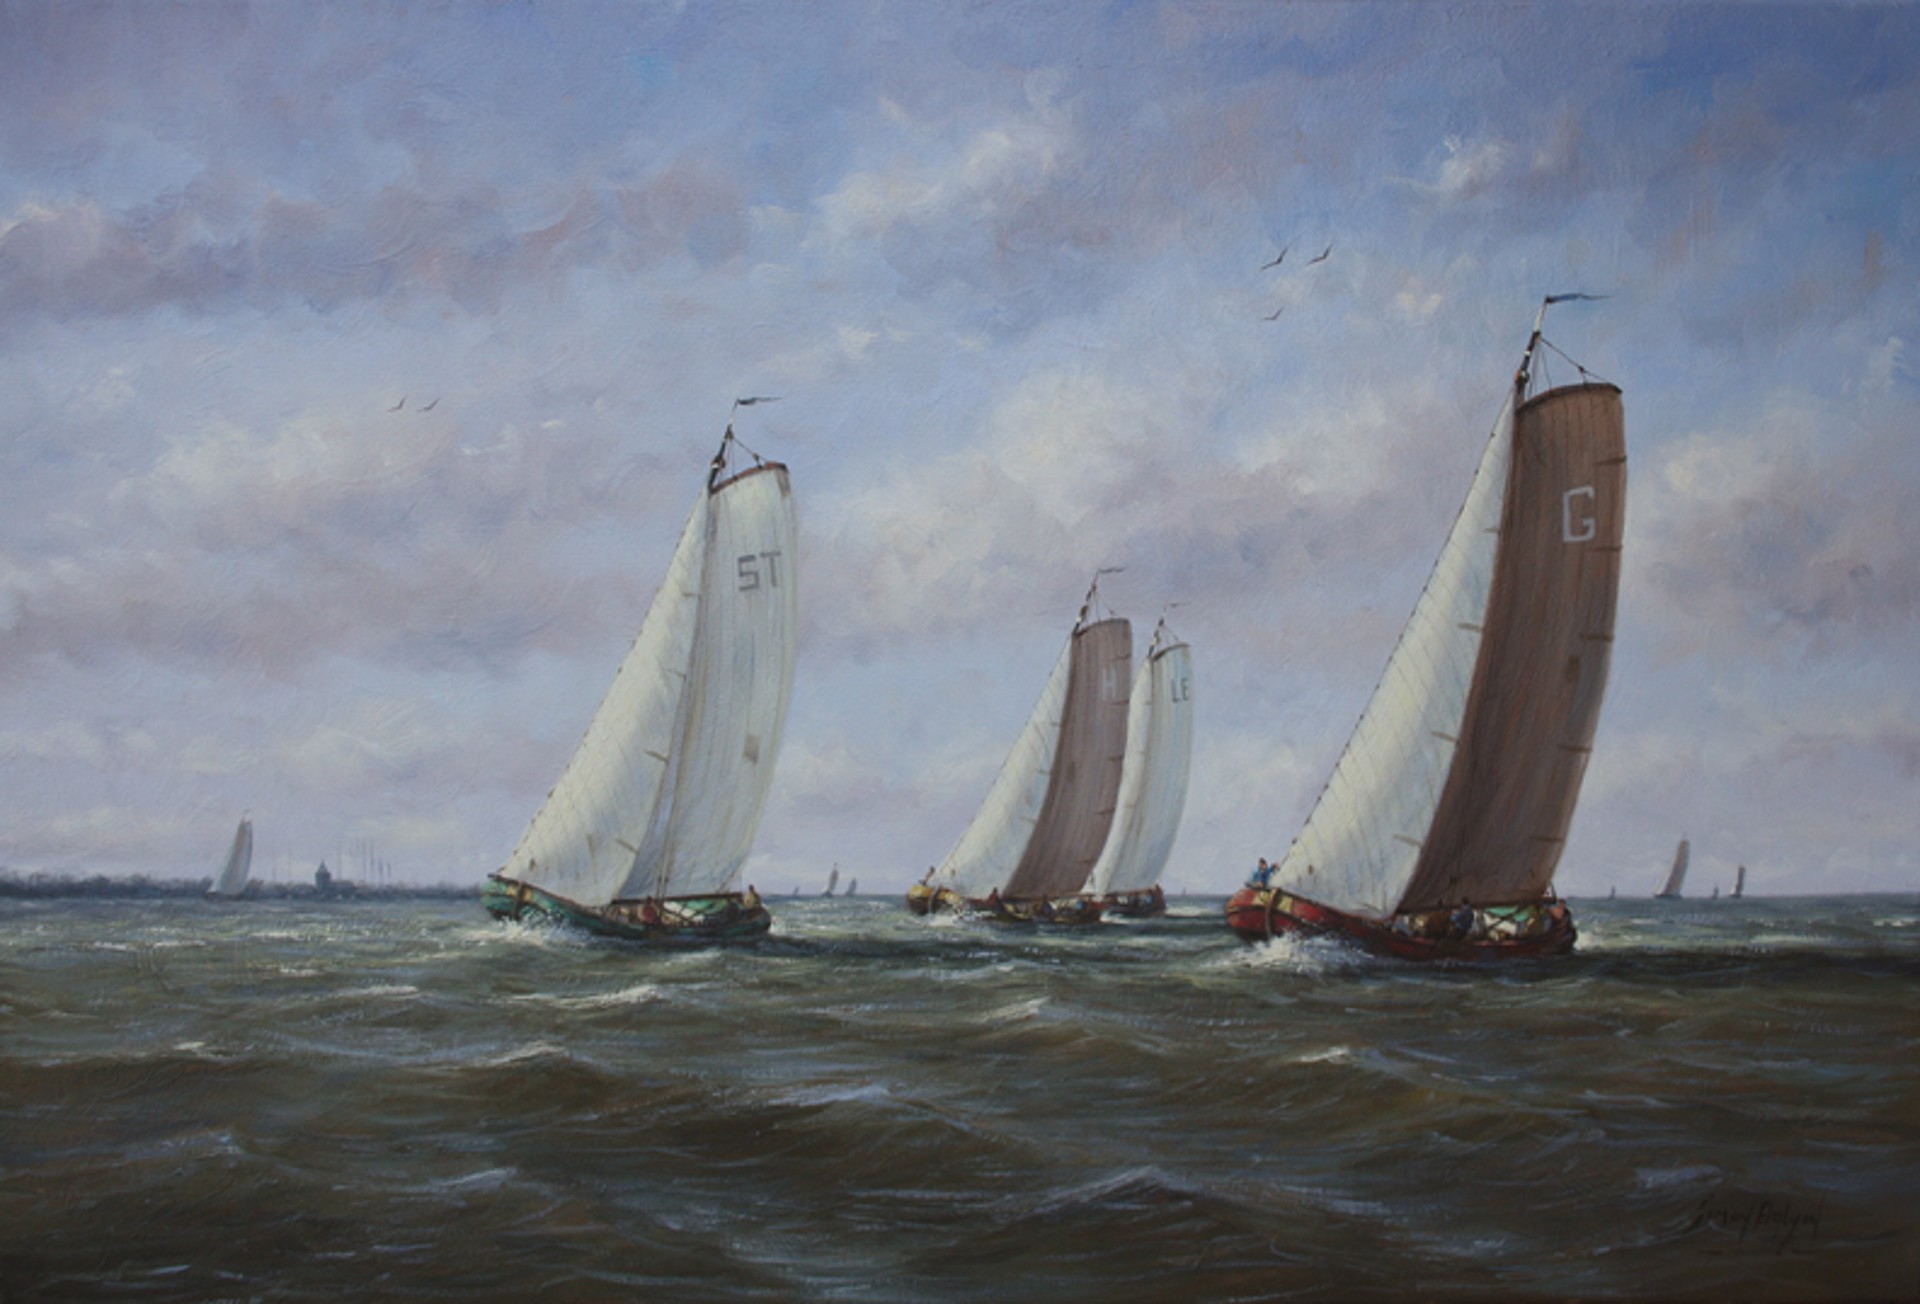 Racing Old Sailboats by Simon Balyon